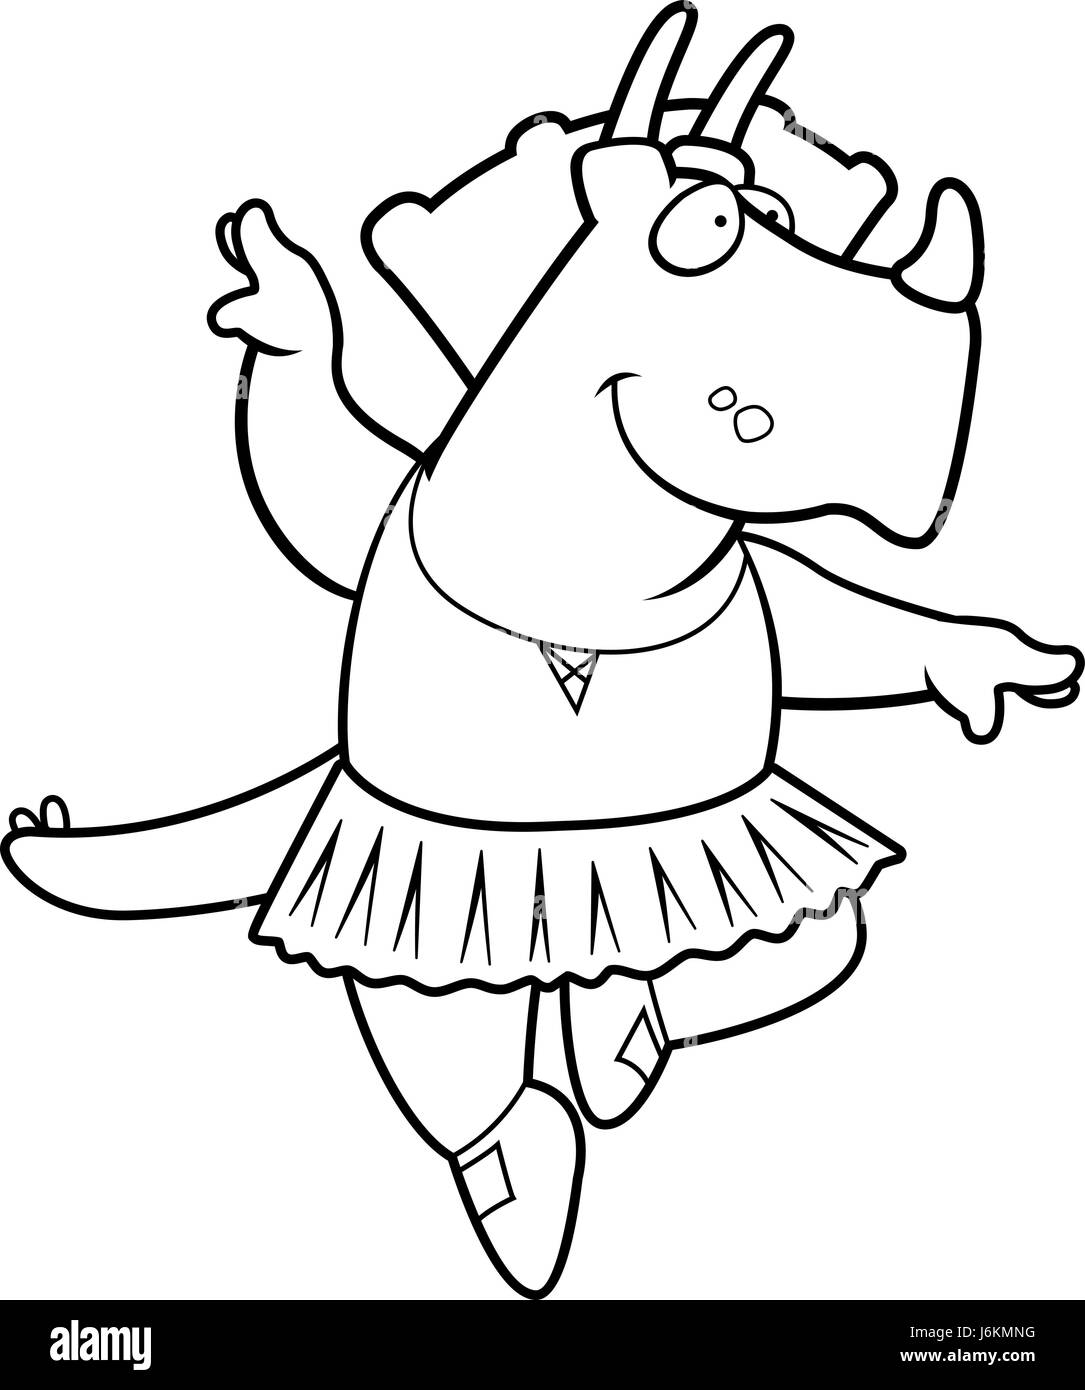 A happy cartoon dinosaur ballerina in a tutu. Stock Vector